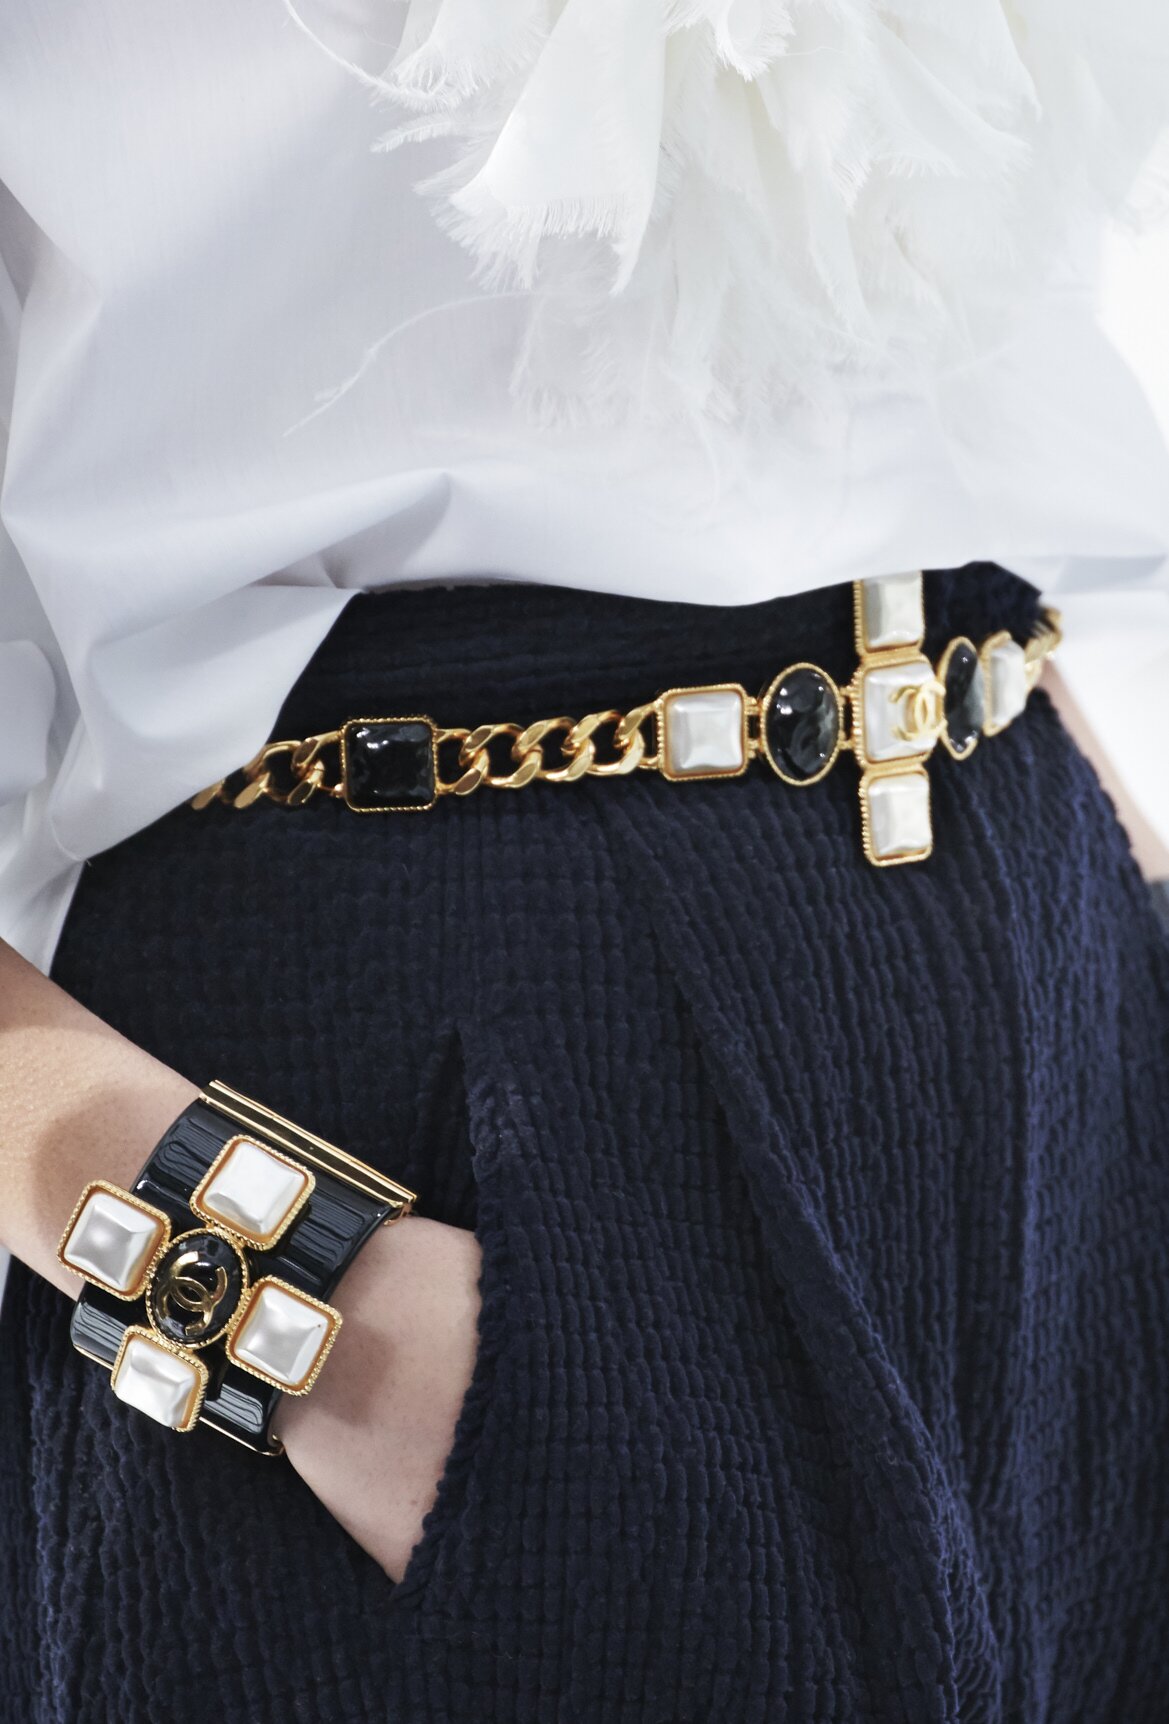 Chanel Paris Fashion Week Belt Detail